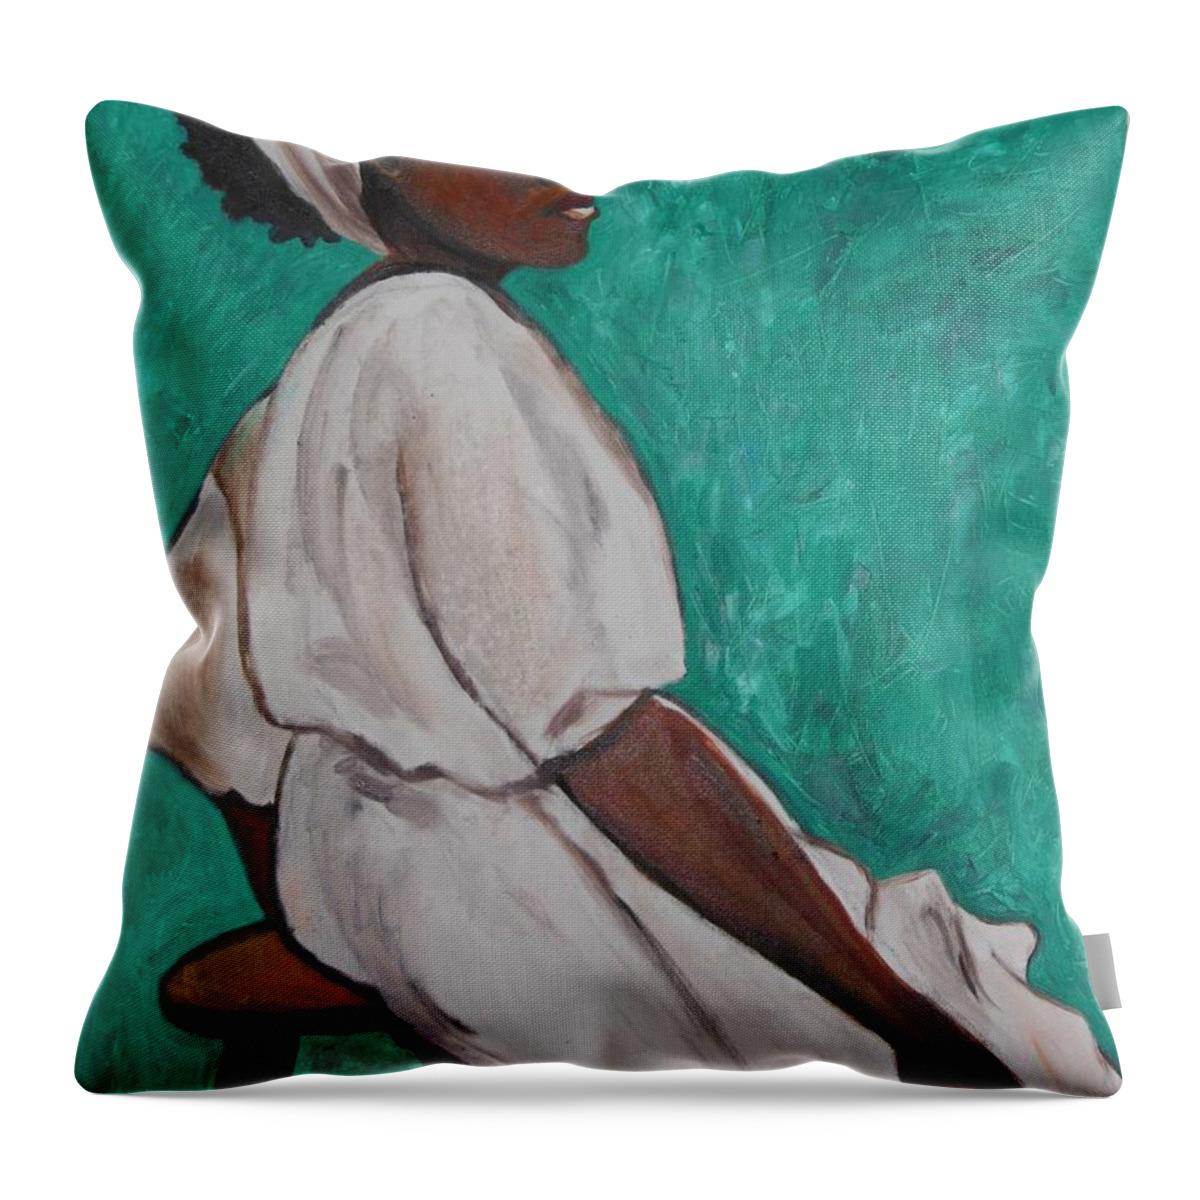 Ethiopian Woman In Green Throw Pillow featuring the painting Ethiopian Woman in Green by Esther Newman-Cohen